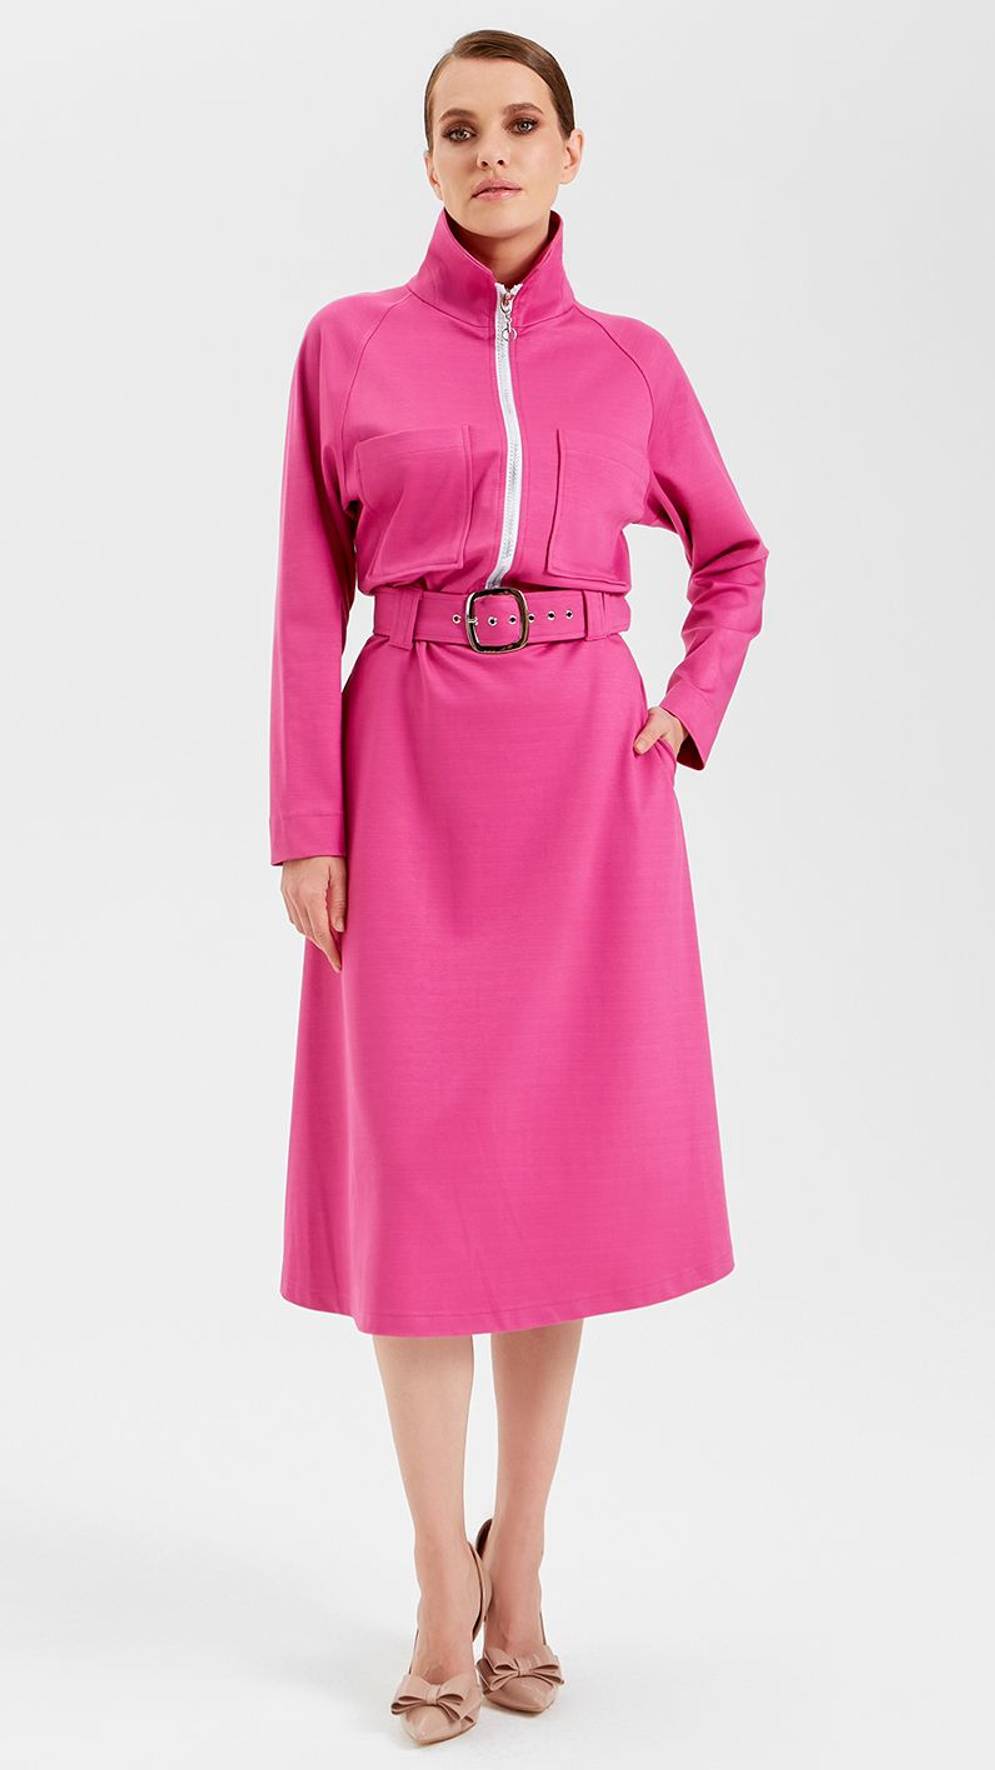 Платье офисное LO розовое
Артикул: 0324210209